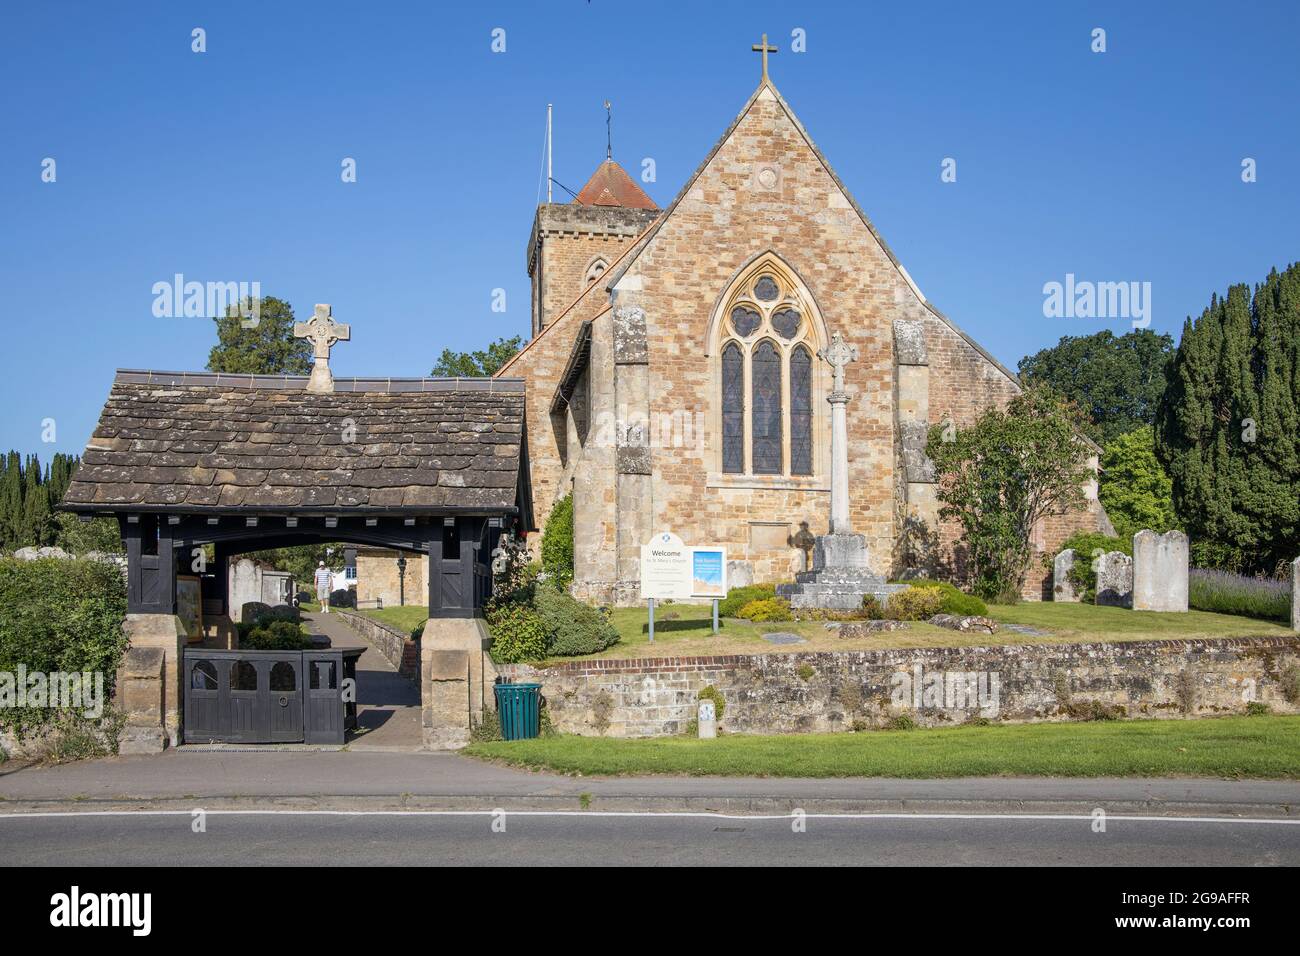 st marys parish church in the village of chiddingfold surrey Stock Photo